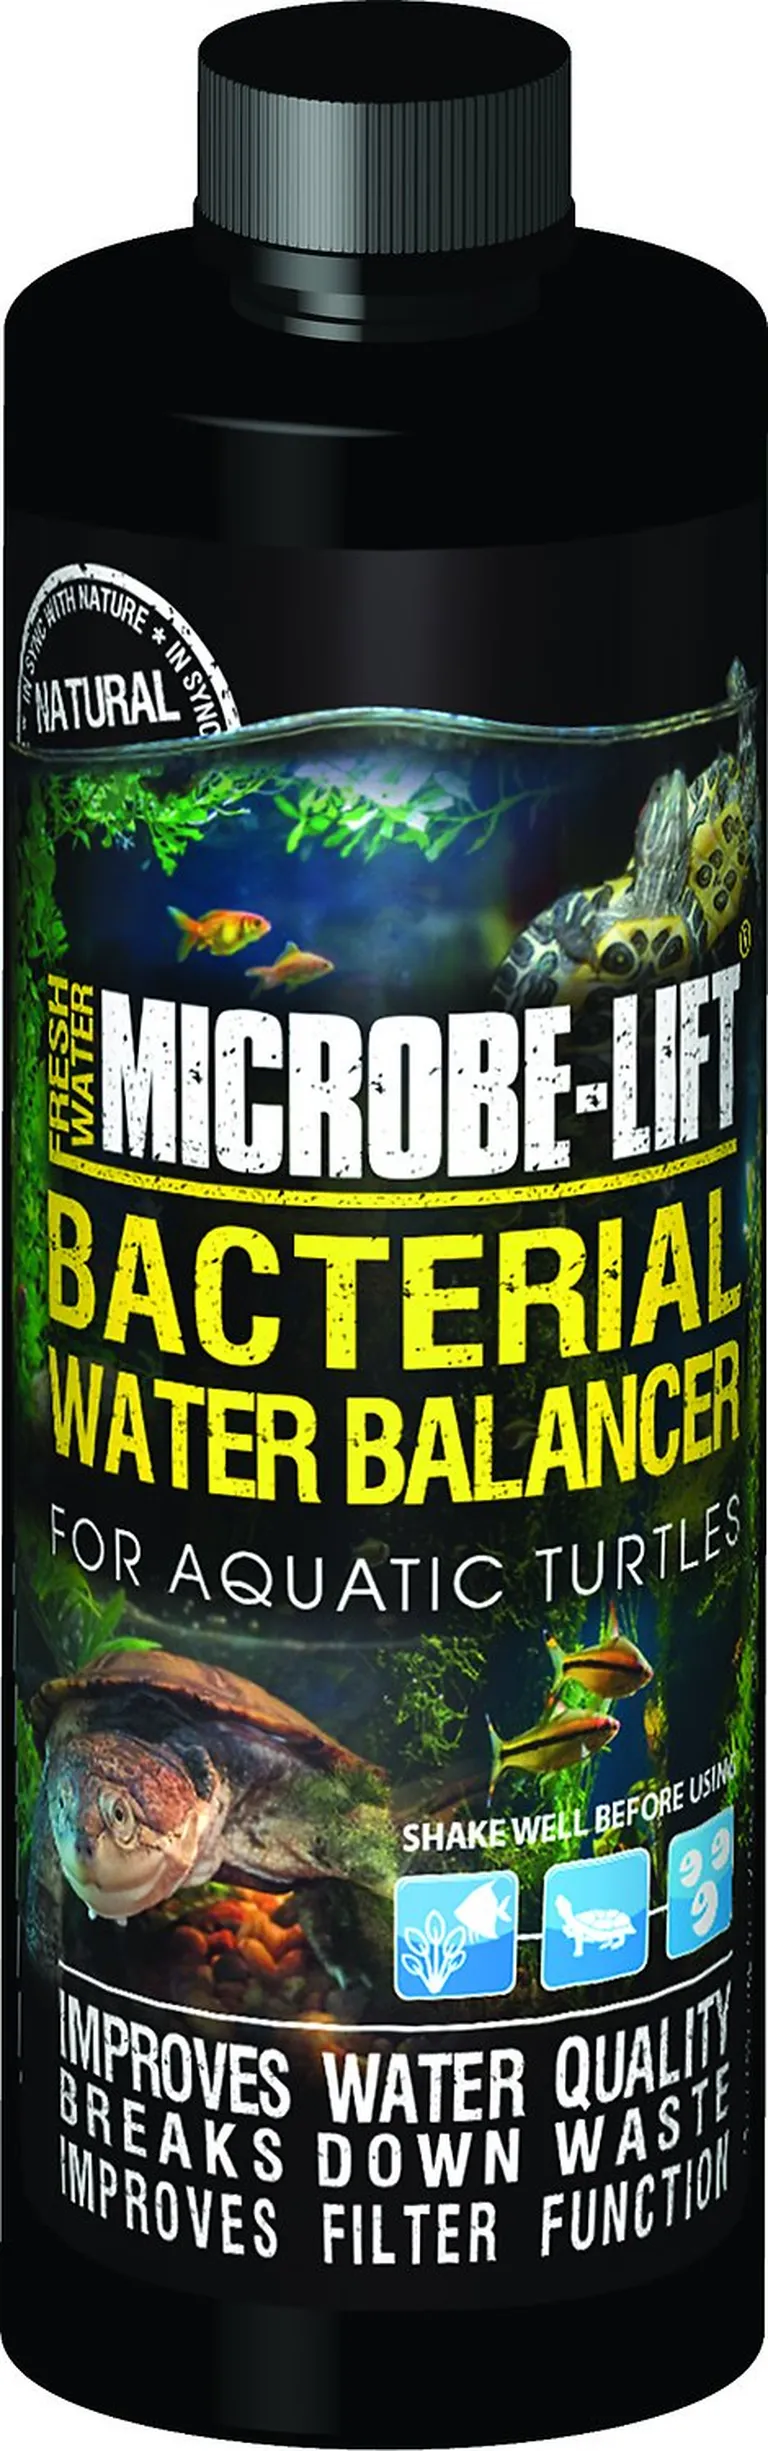 Microbe-Lift Aquatic Turtle Bacterial Water Balancer Photo 2